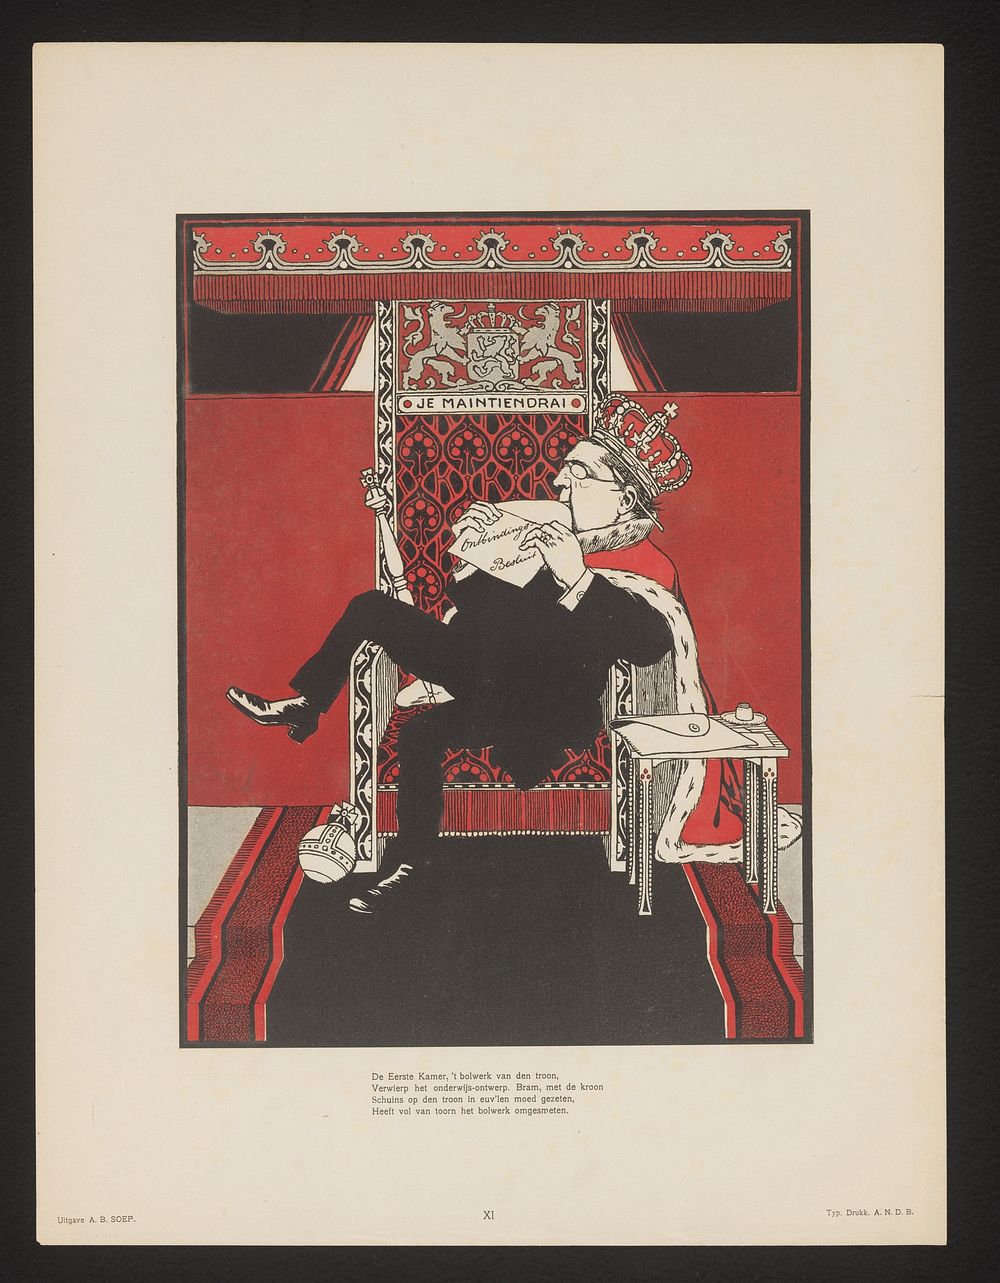 Abraham Kuyper op de troon (1905) by Albert Hahn I, A B Soep and Typ Drukk A N D B